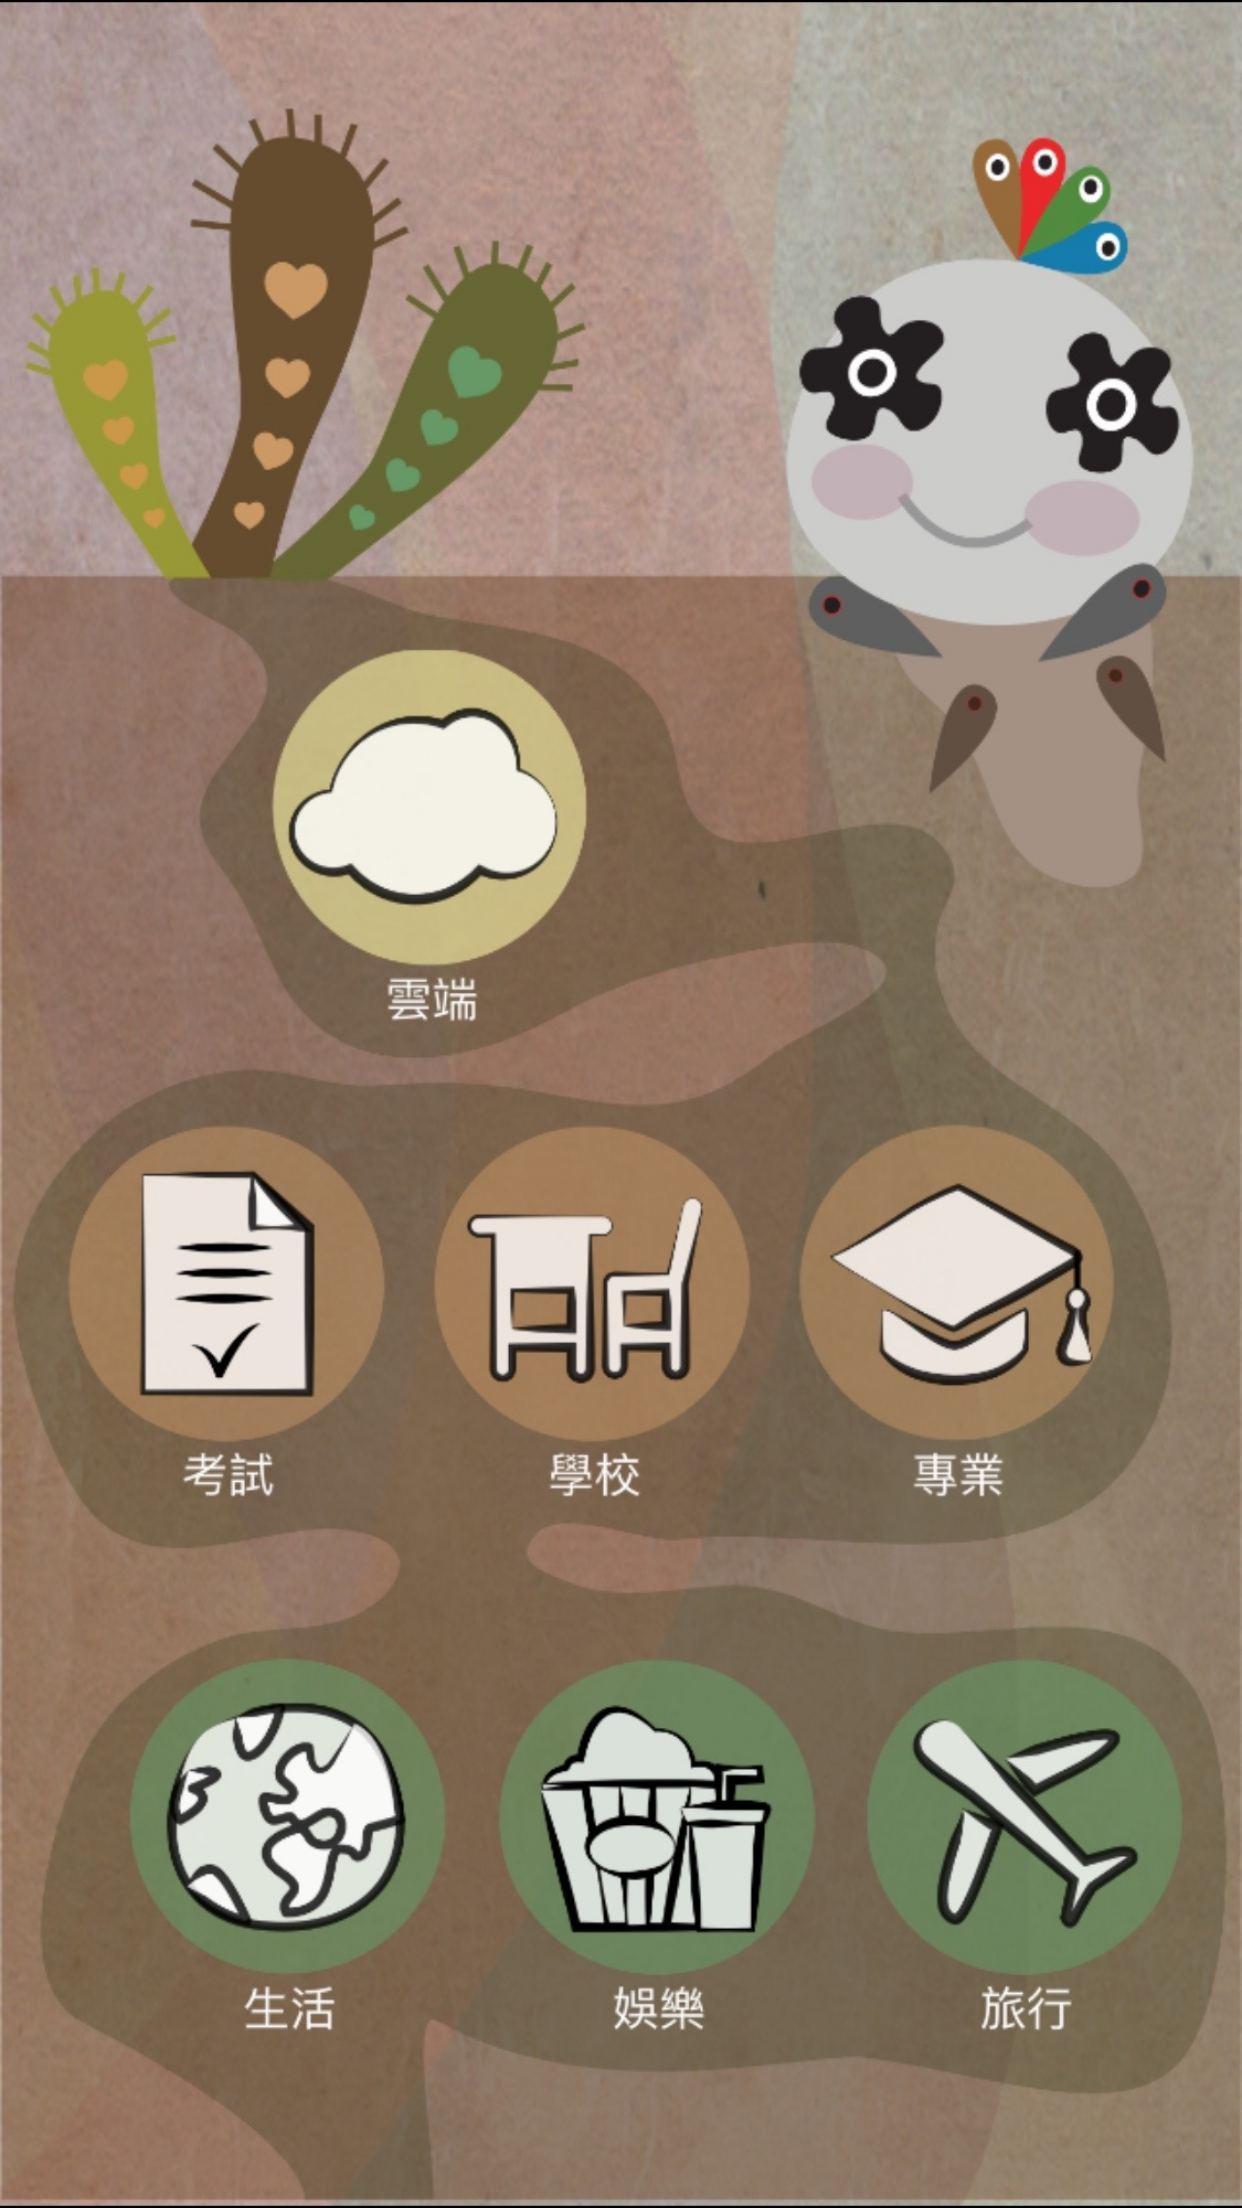 Screenshot 1 of คำศัพท์ที่ซุกซน-TOEFL TOEFL/TOEIC TOEIC 1.7